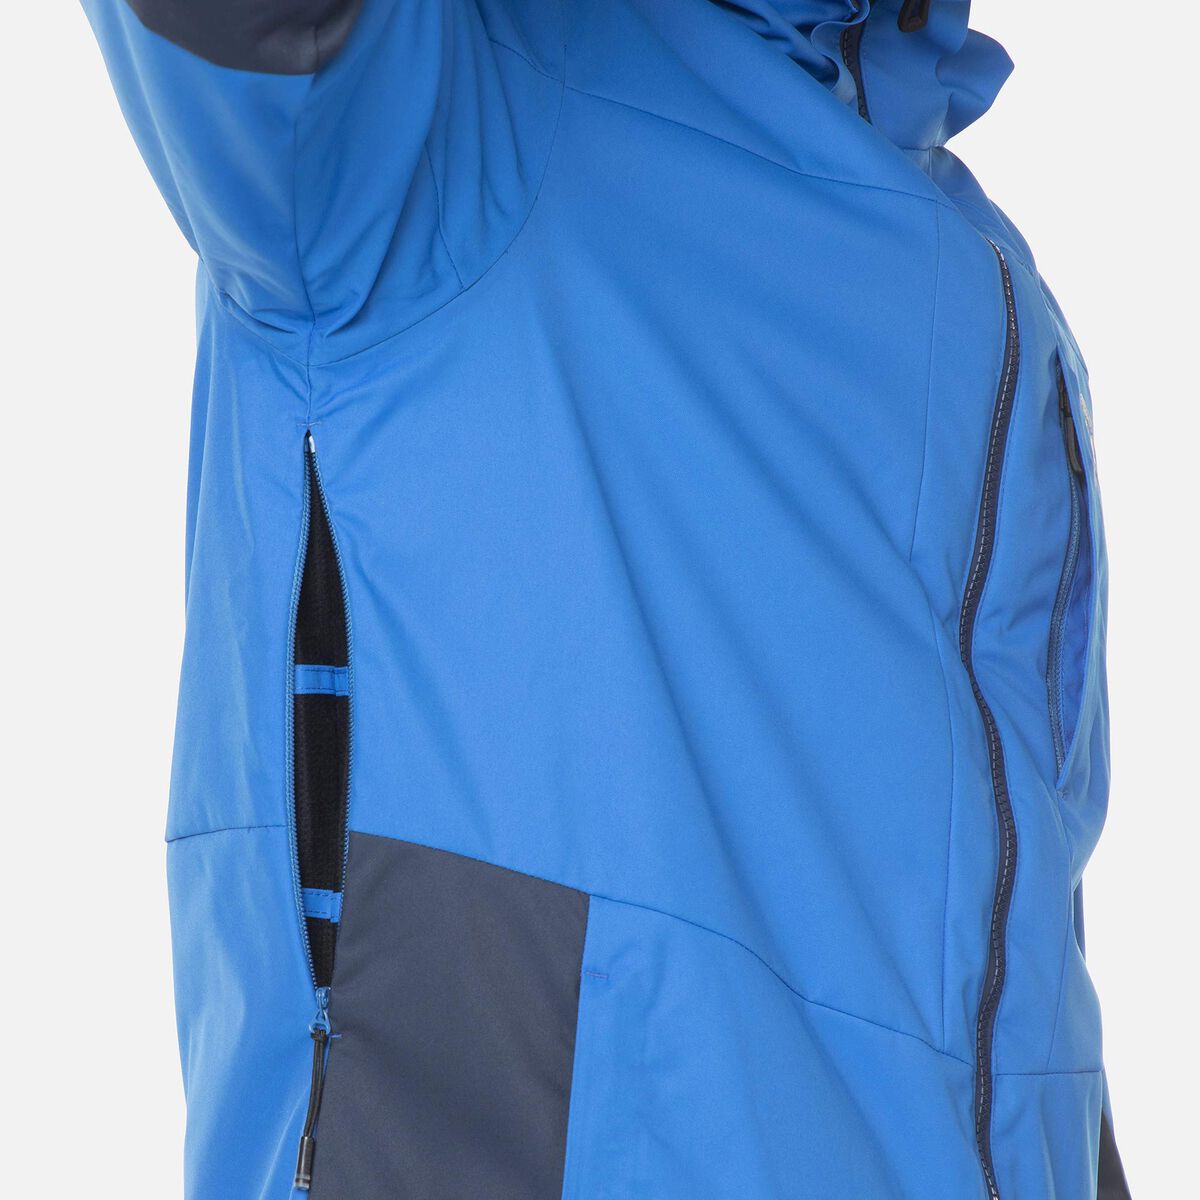 Rossignol Men's All Speed Ski Jacket blue